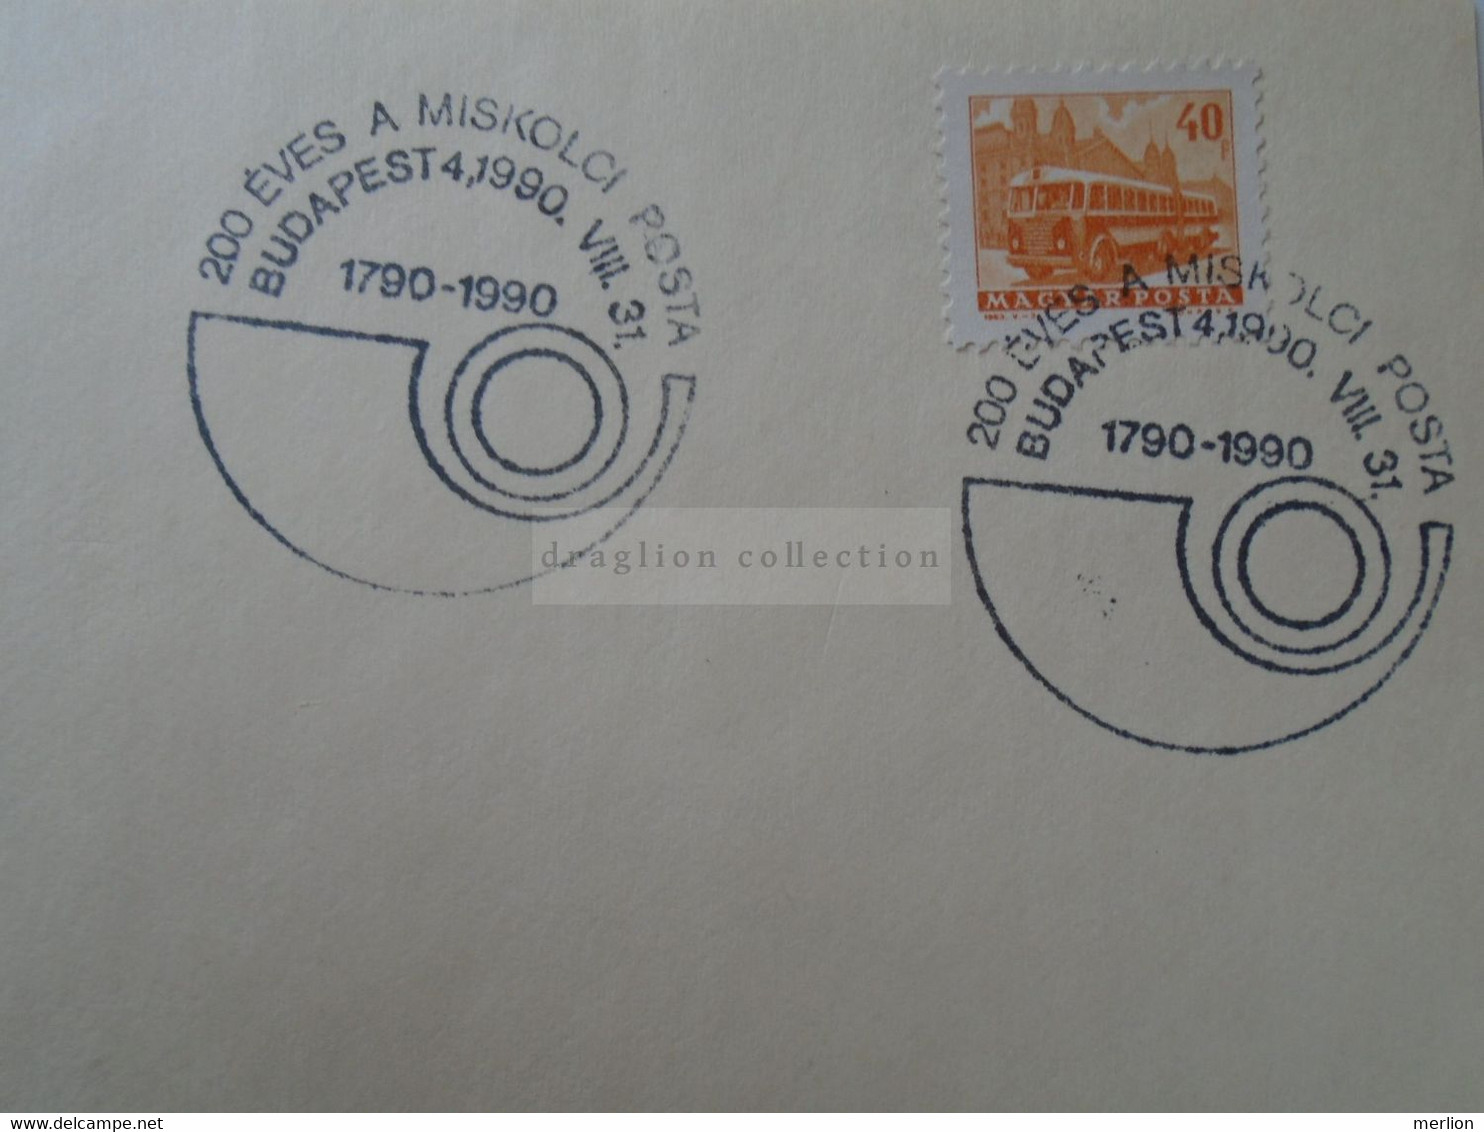 D187084   HUNGARY  Postmark     MAGYAR POSTA   - Hungarian Post - 200 éves  A Miskolci Posta  1790-1990 - Marcophilie